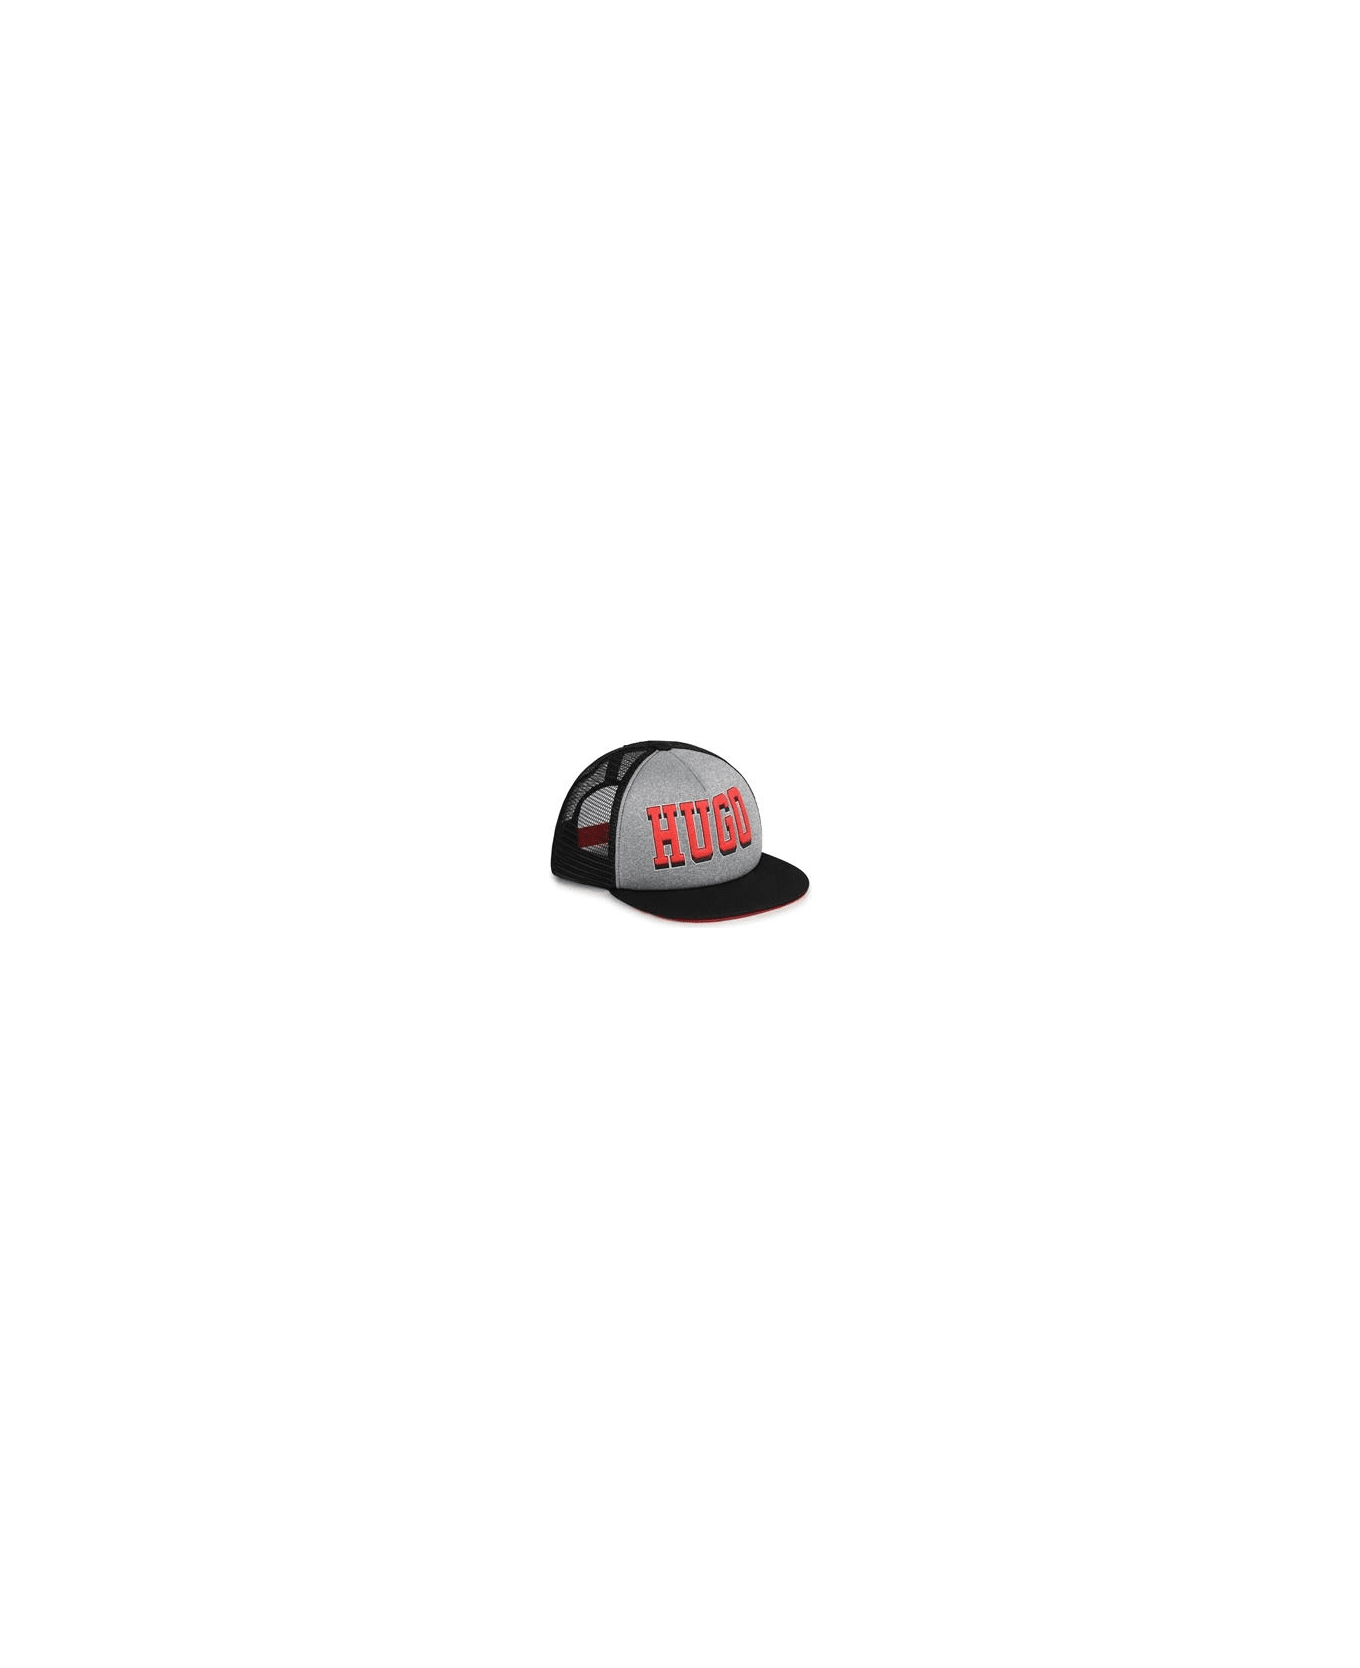 Hugo Boss Printed Baseball Cap - Black